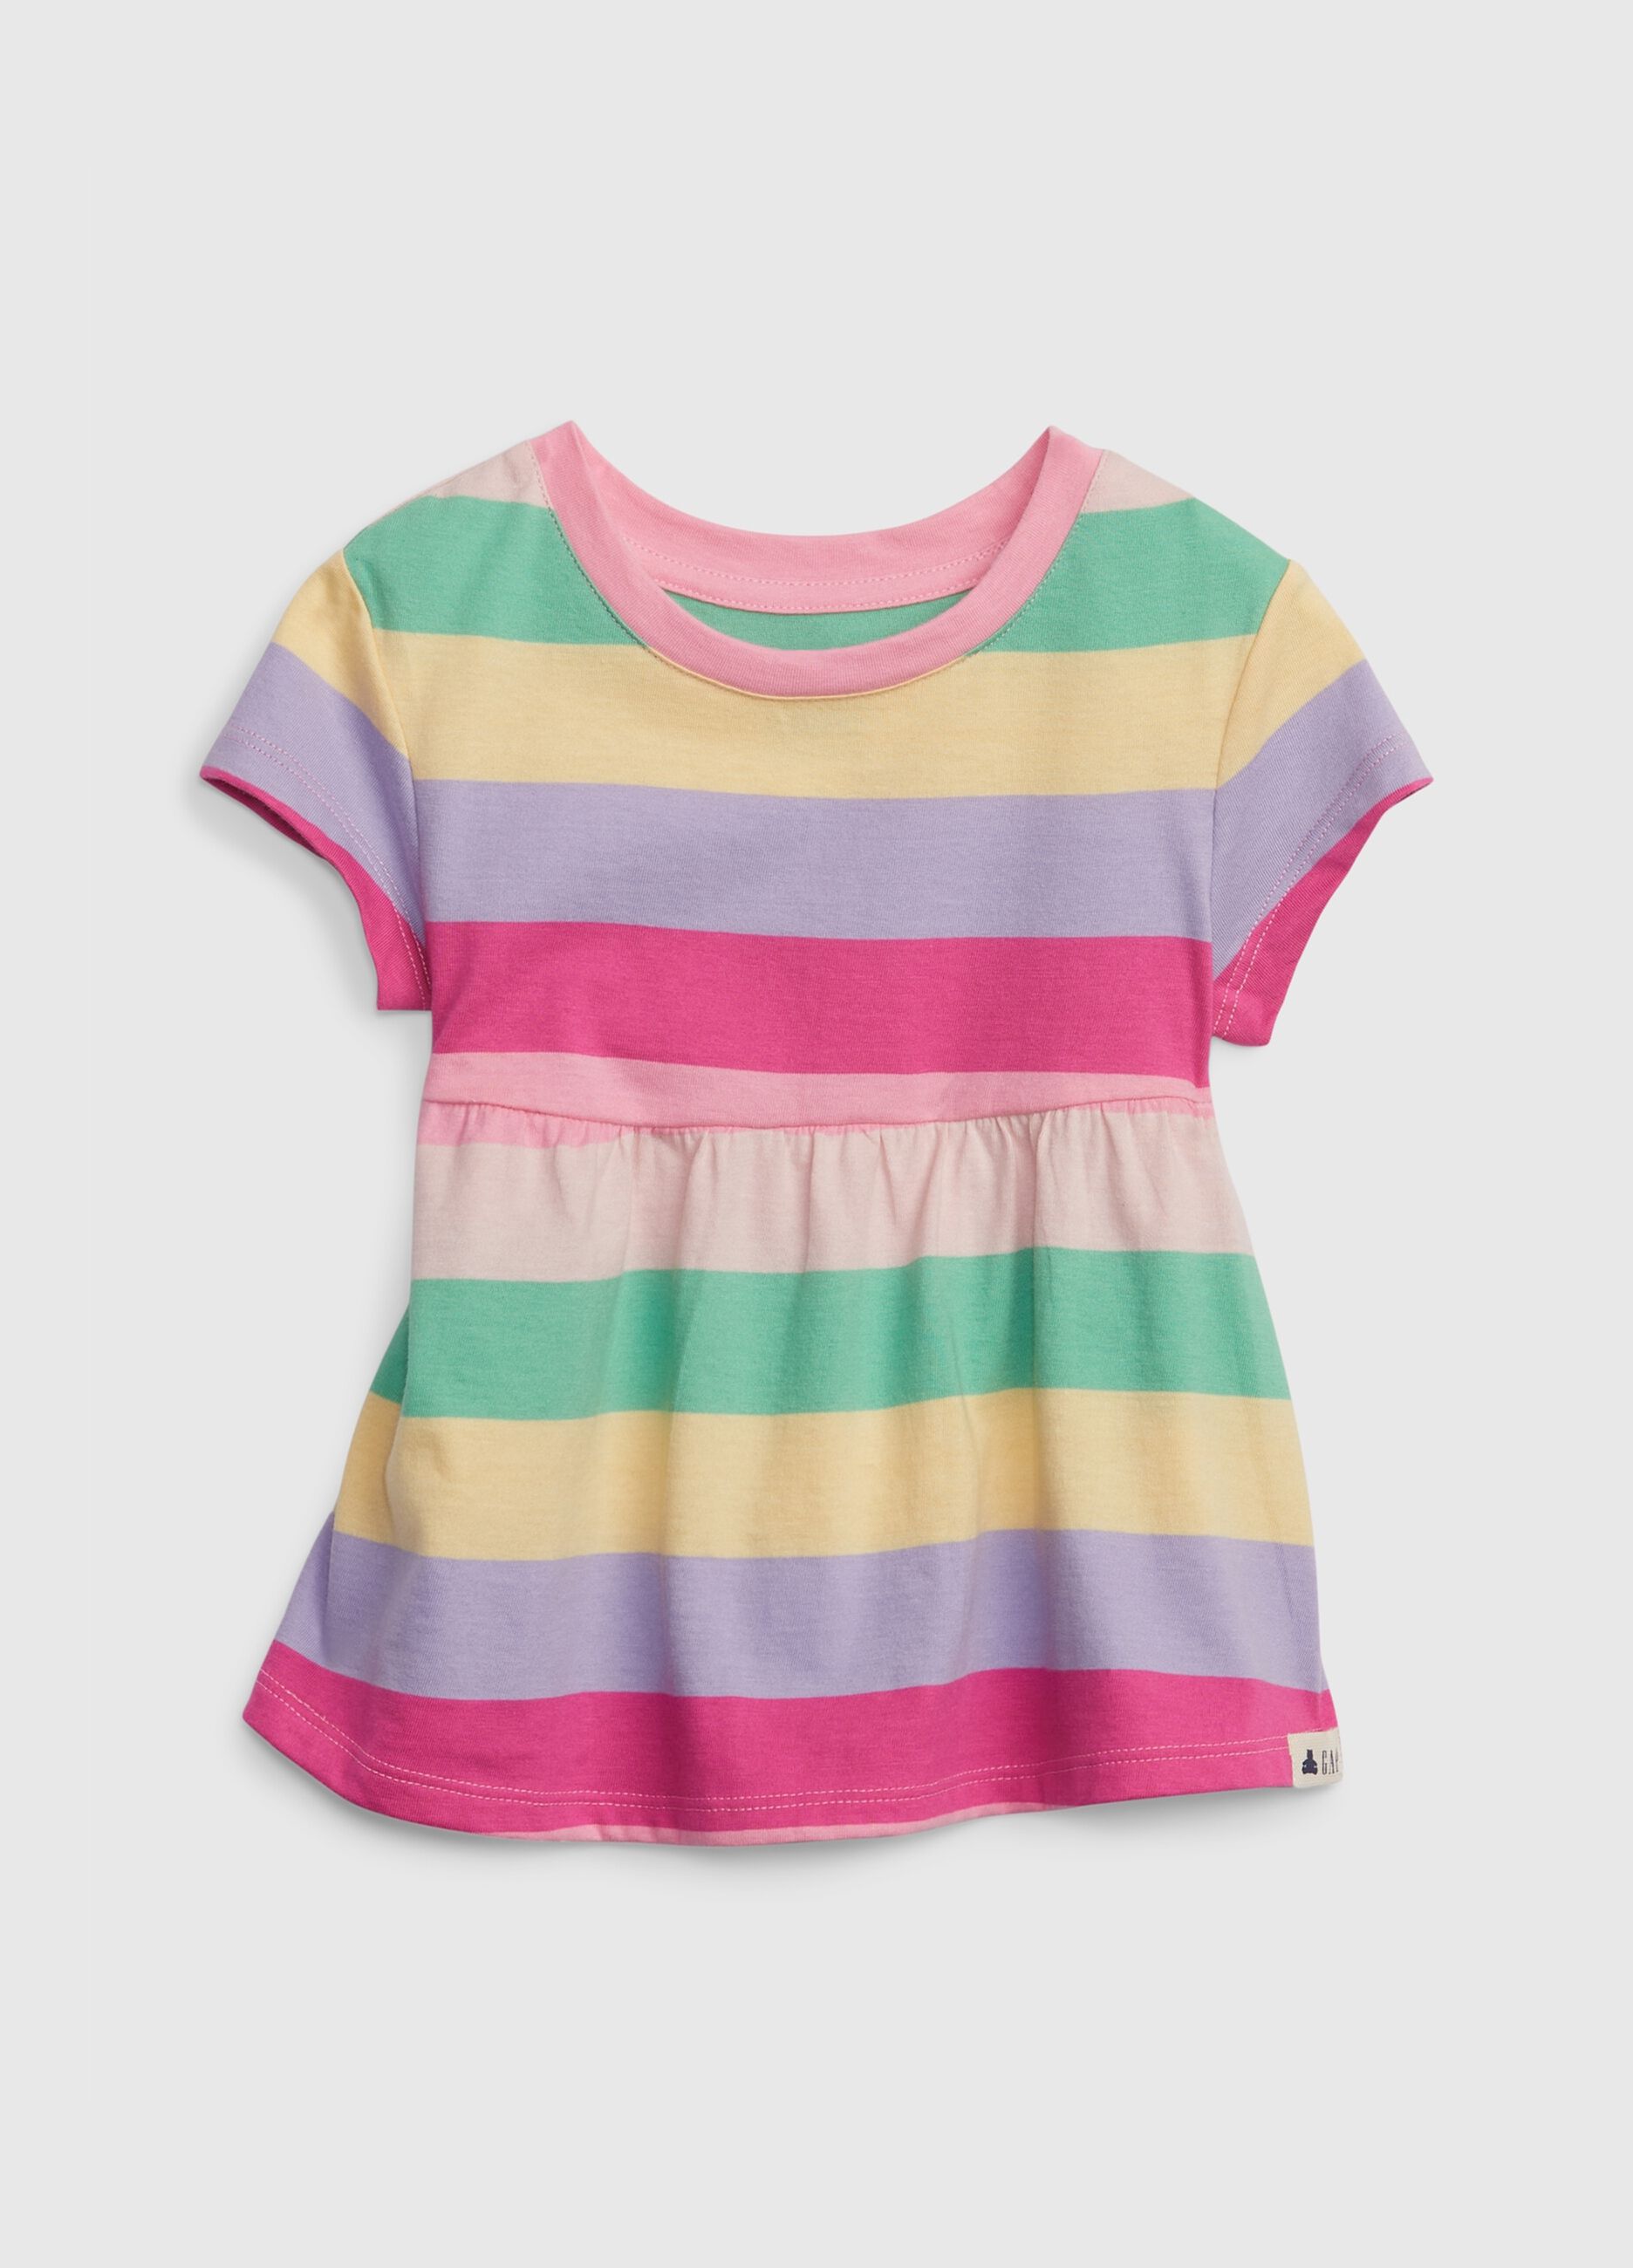 Organic cotton T-shirt with striped pattern